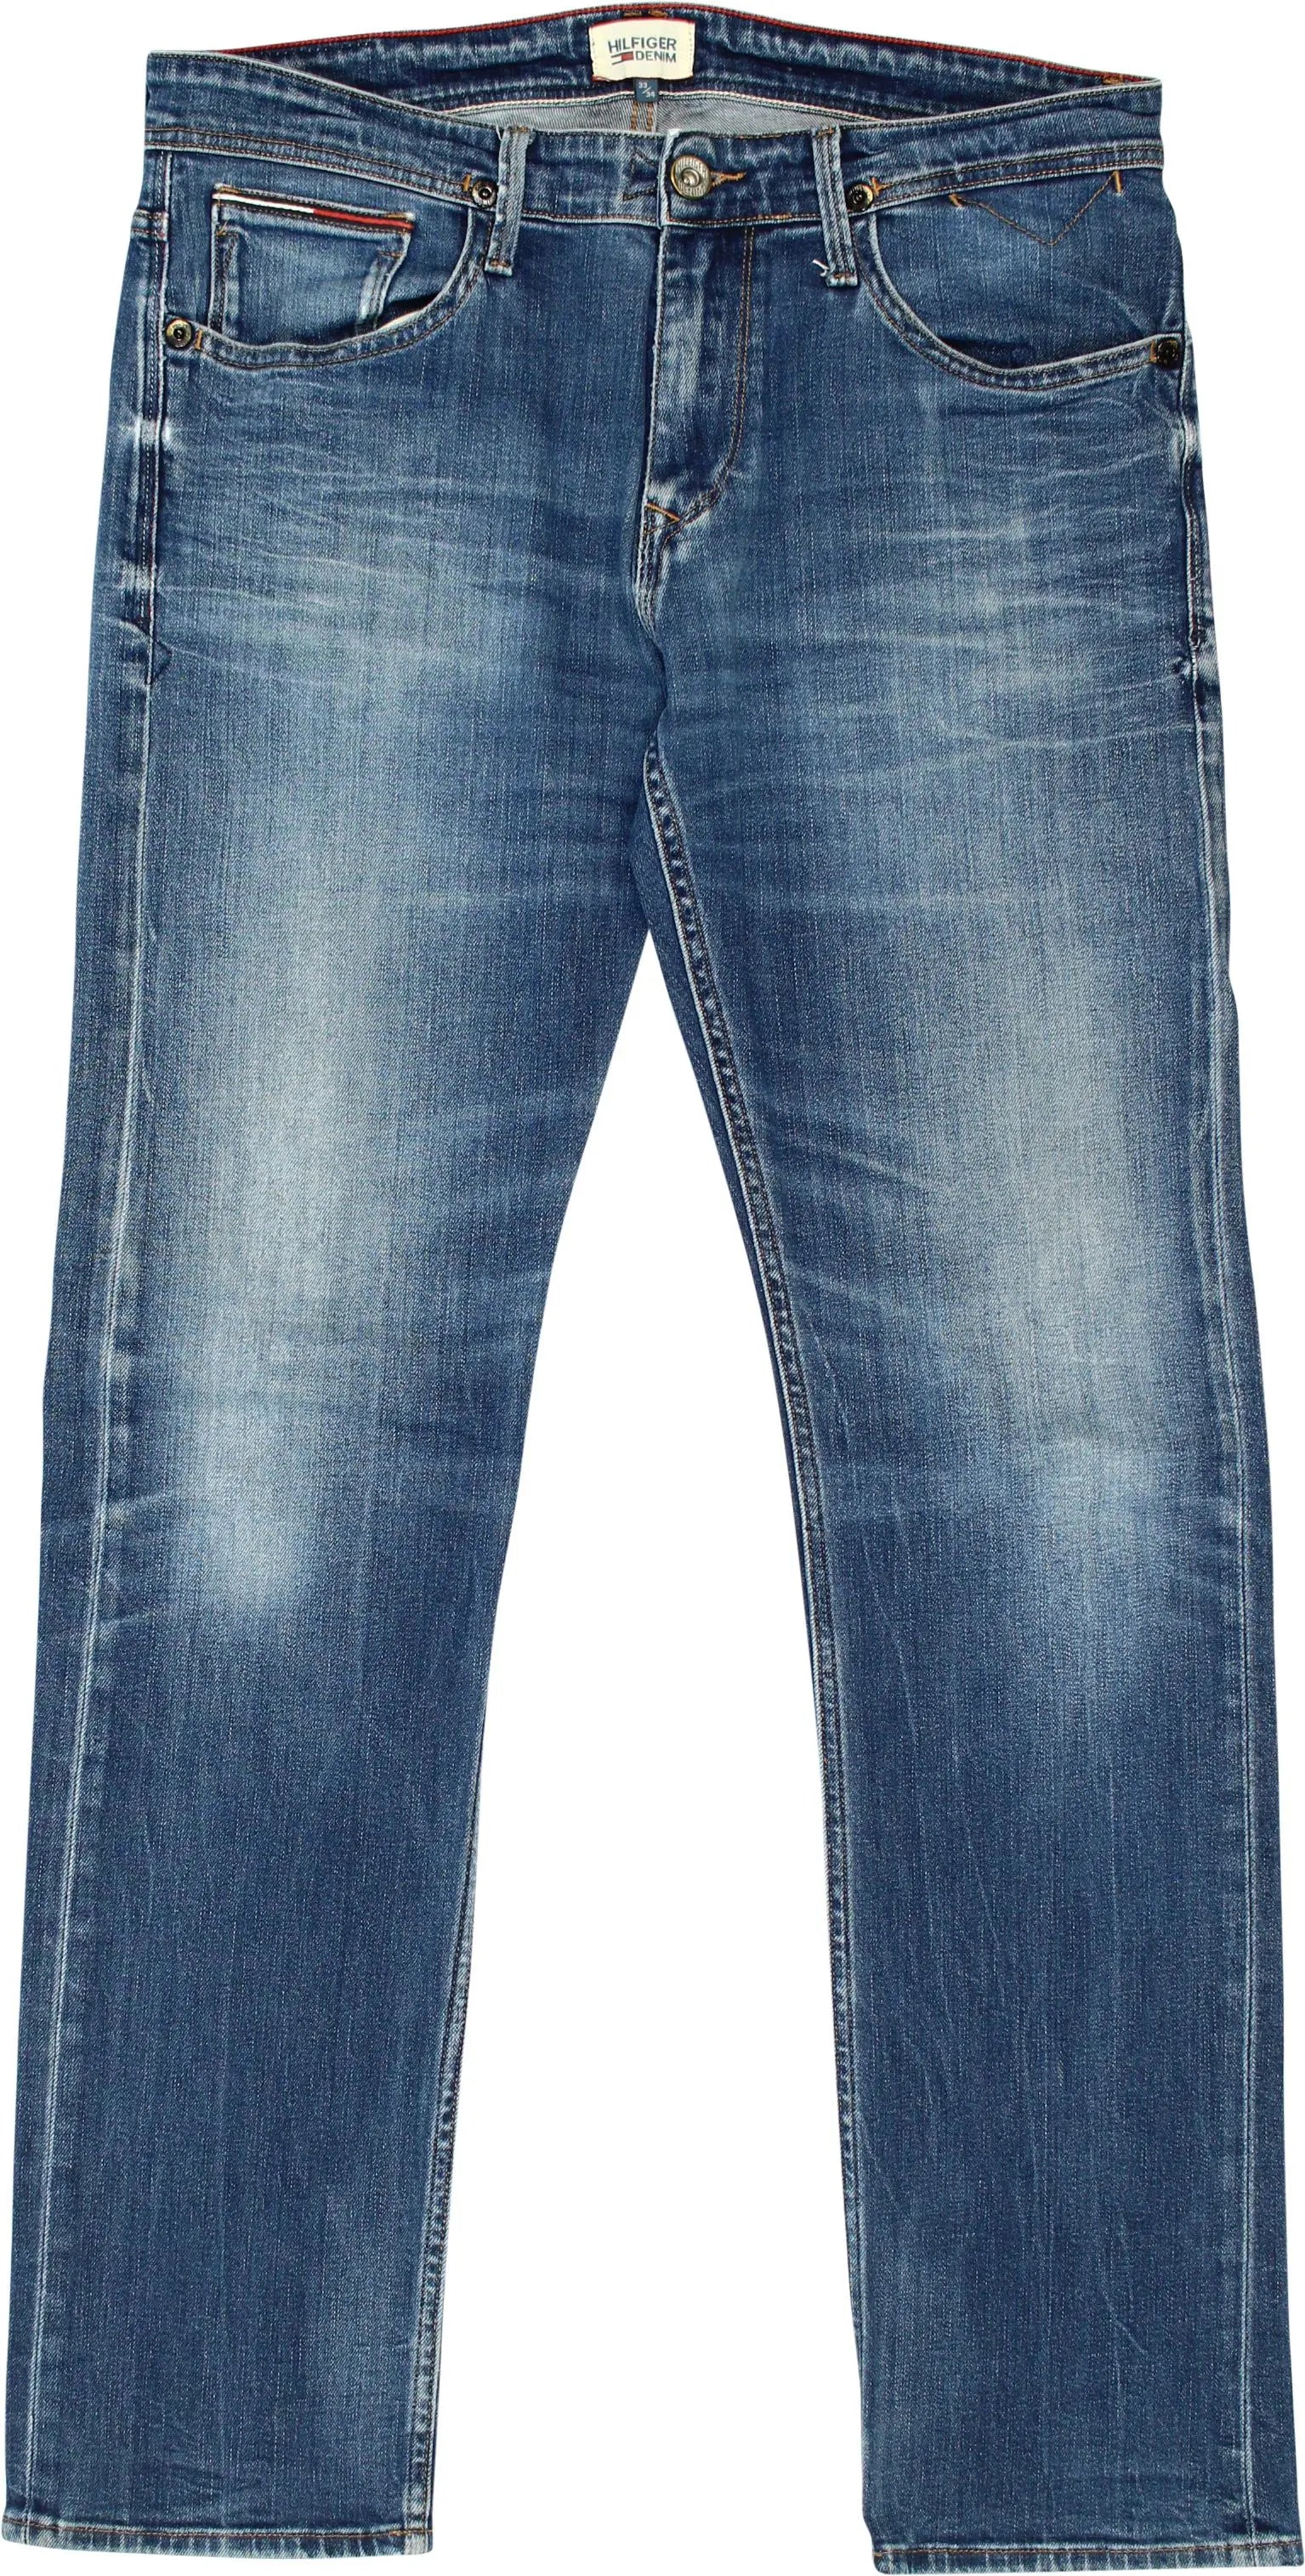 Tommy Hilfiger - Slim Fit Jeans- ThriftTale.com - Vintage and second handclothing